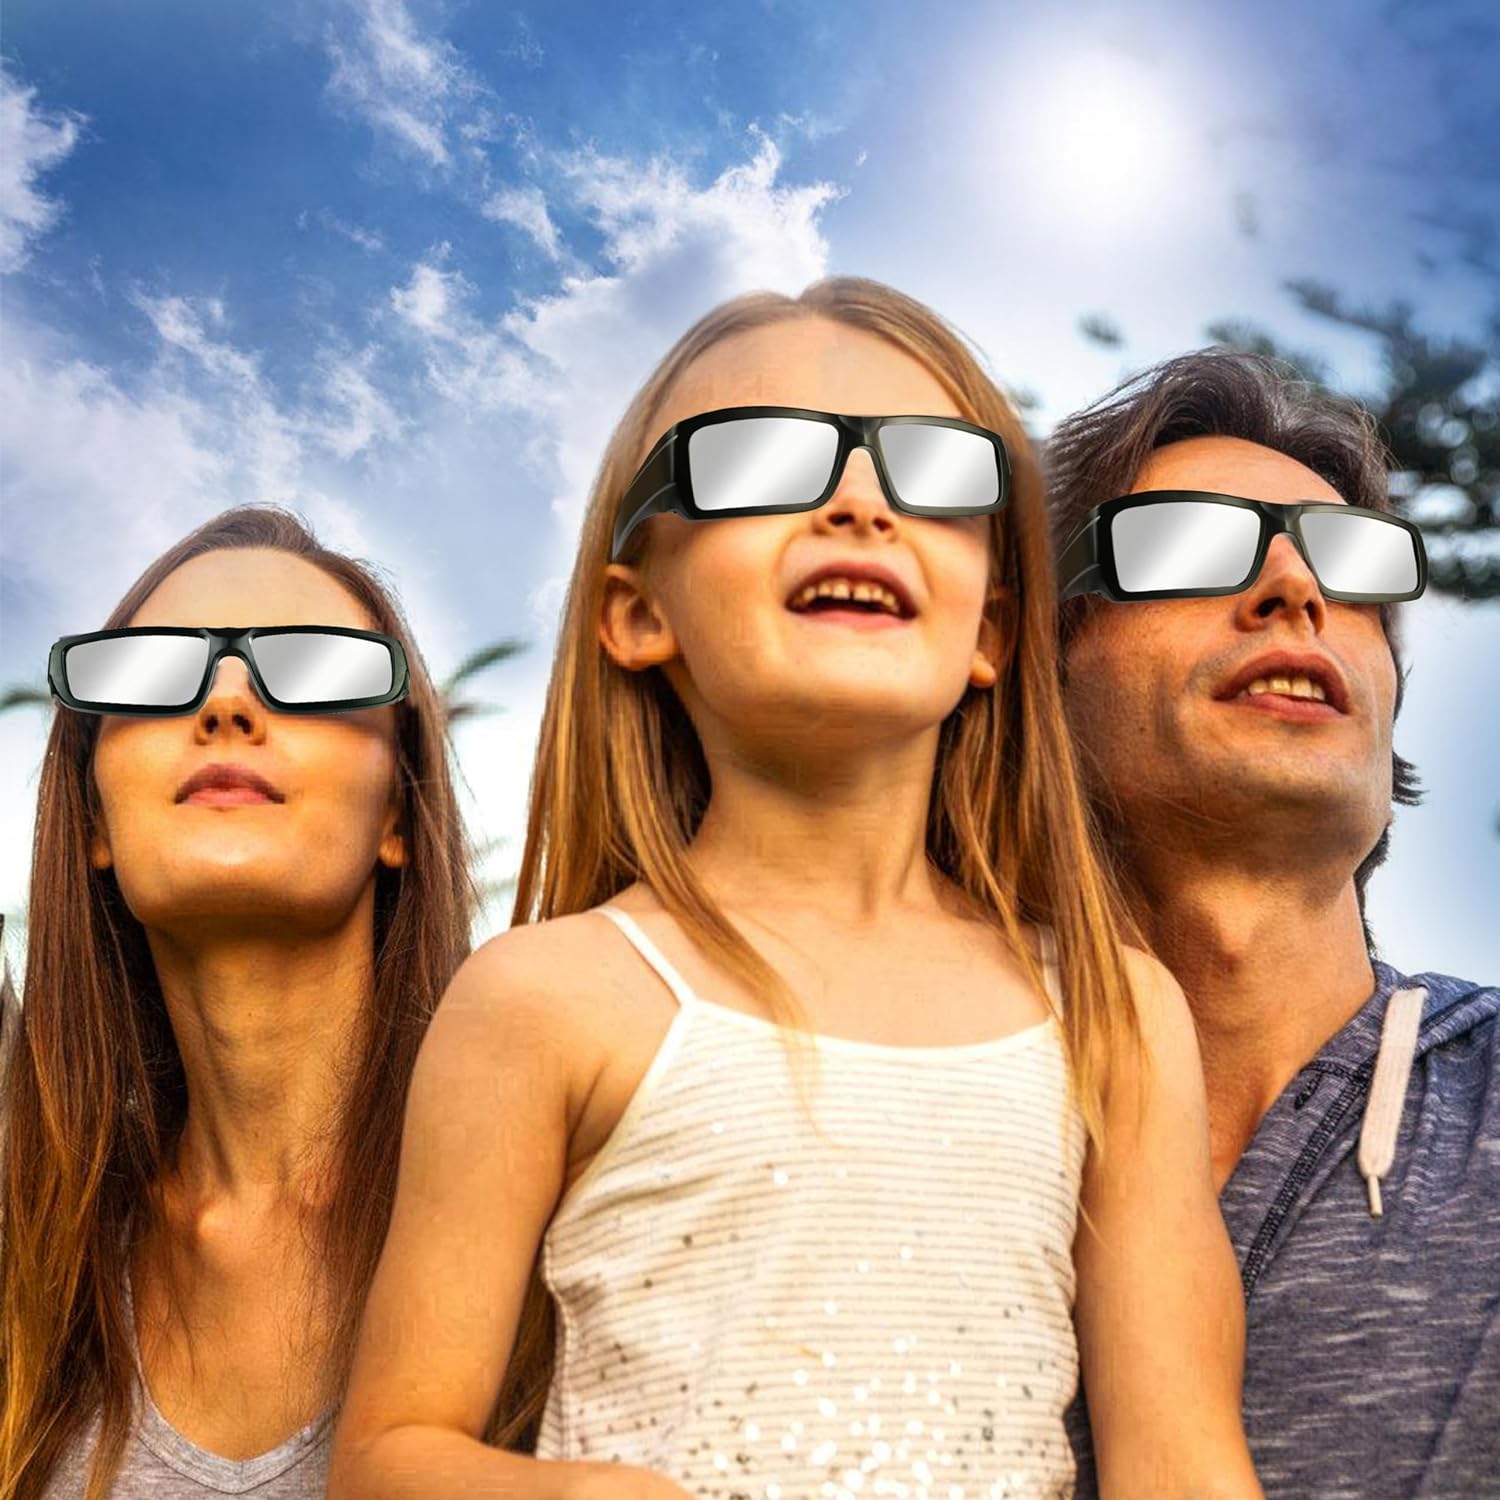 solar eclipse glasses free